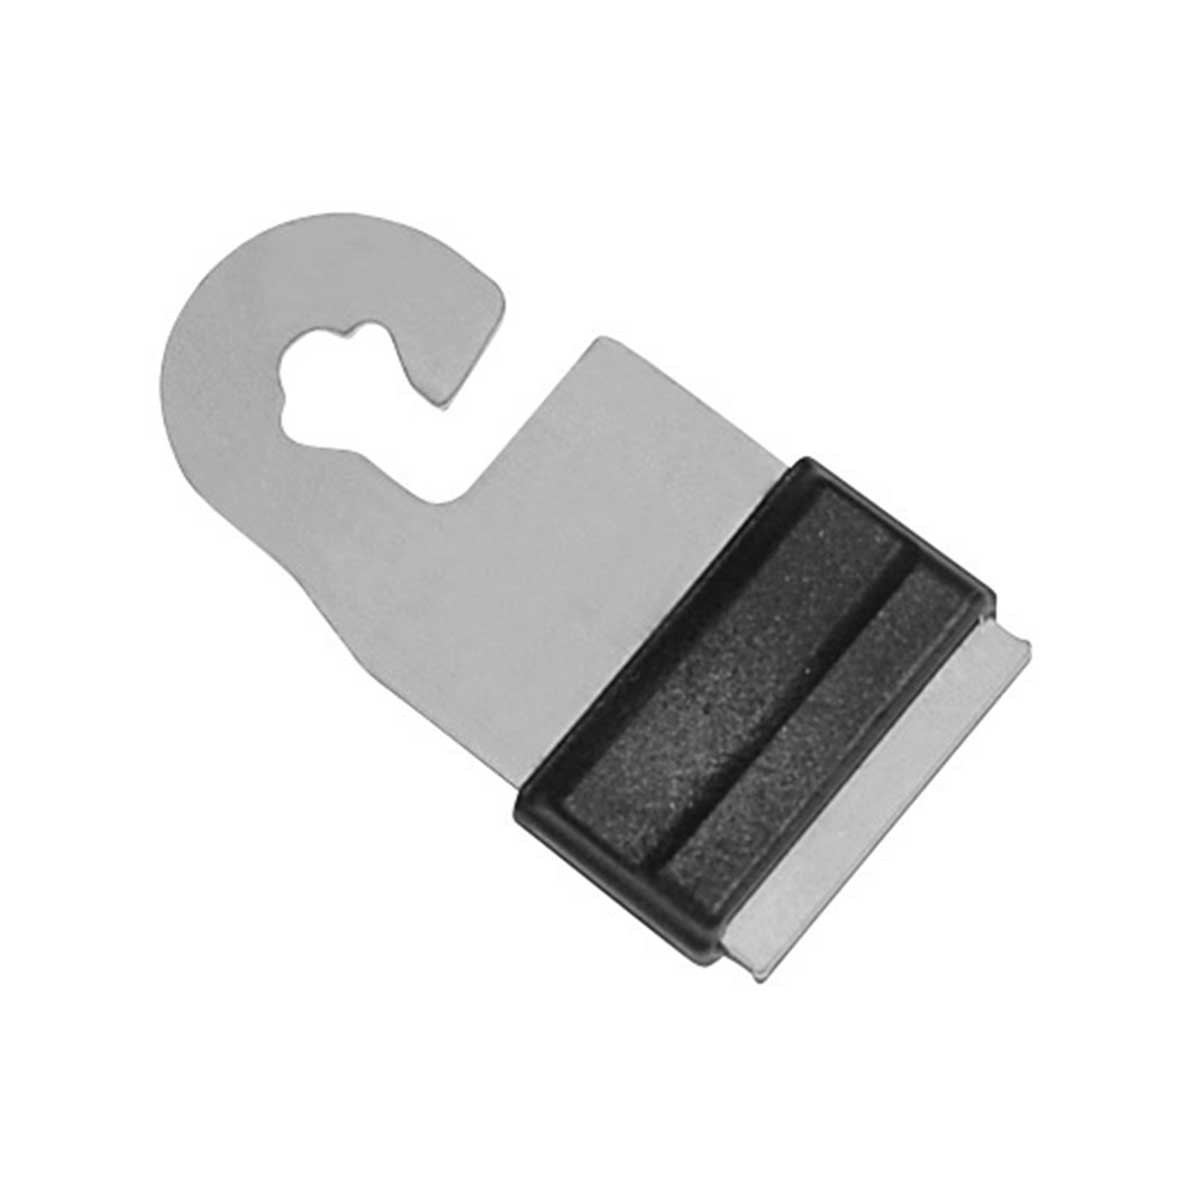 4x Gate handle connector Litzclip for tapes 10-20 mm